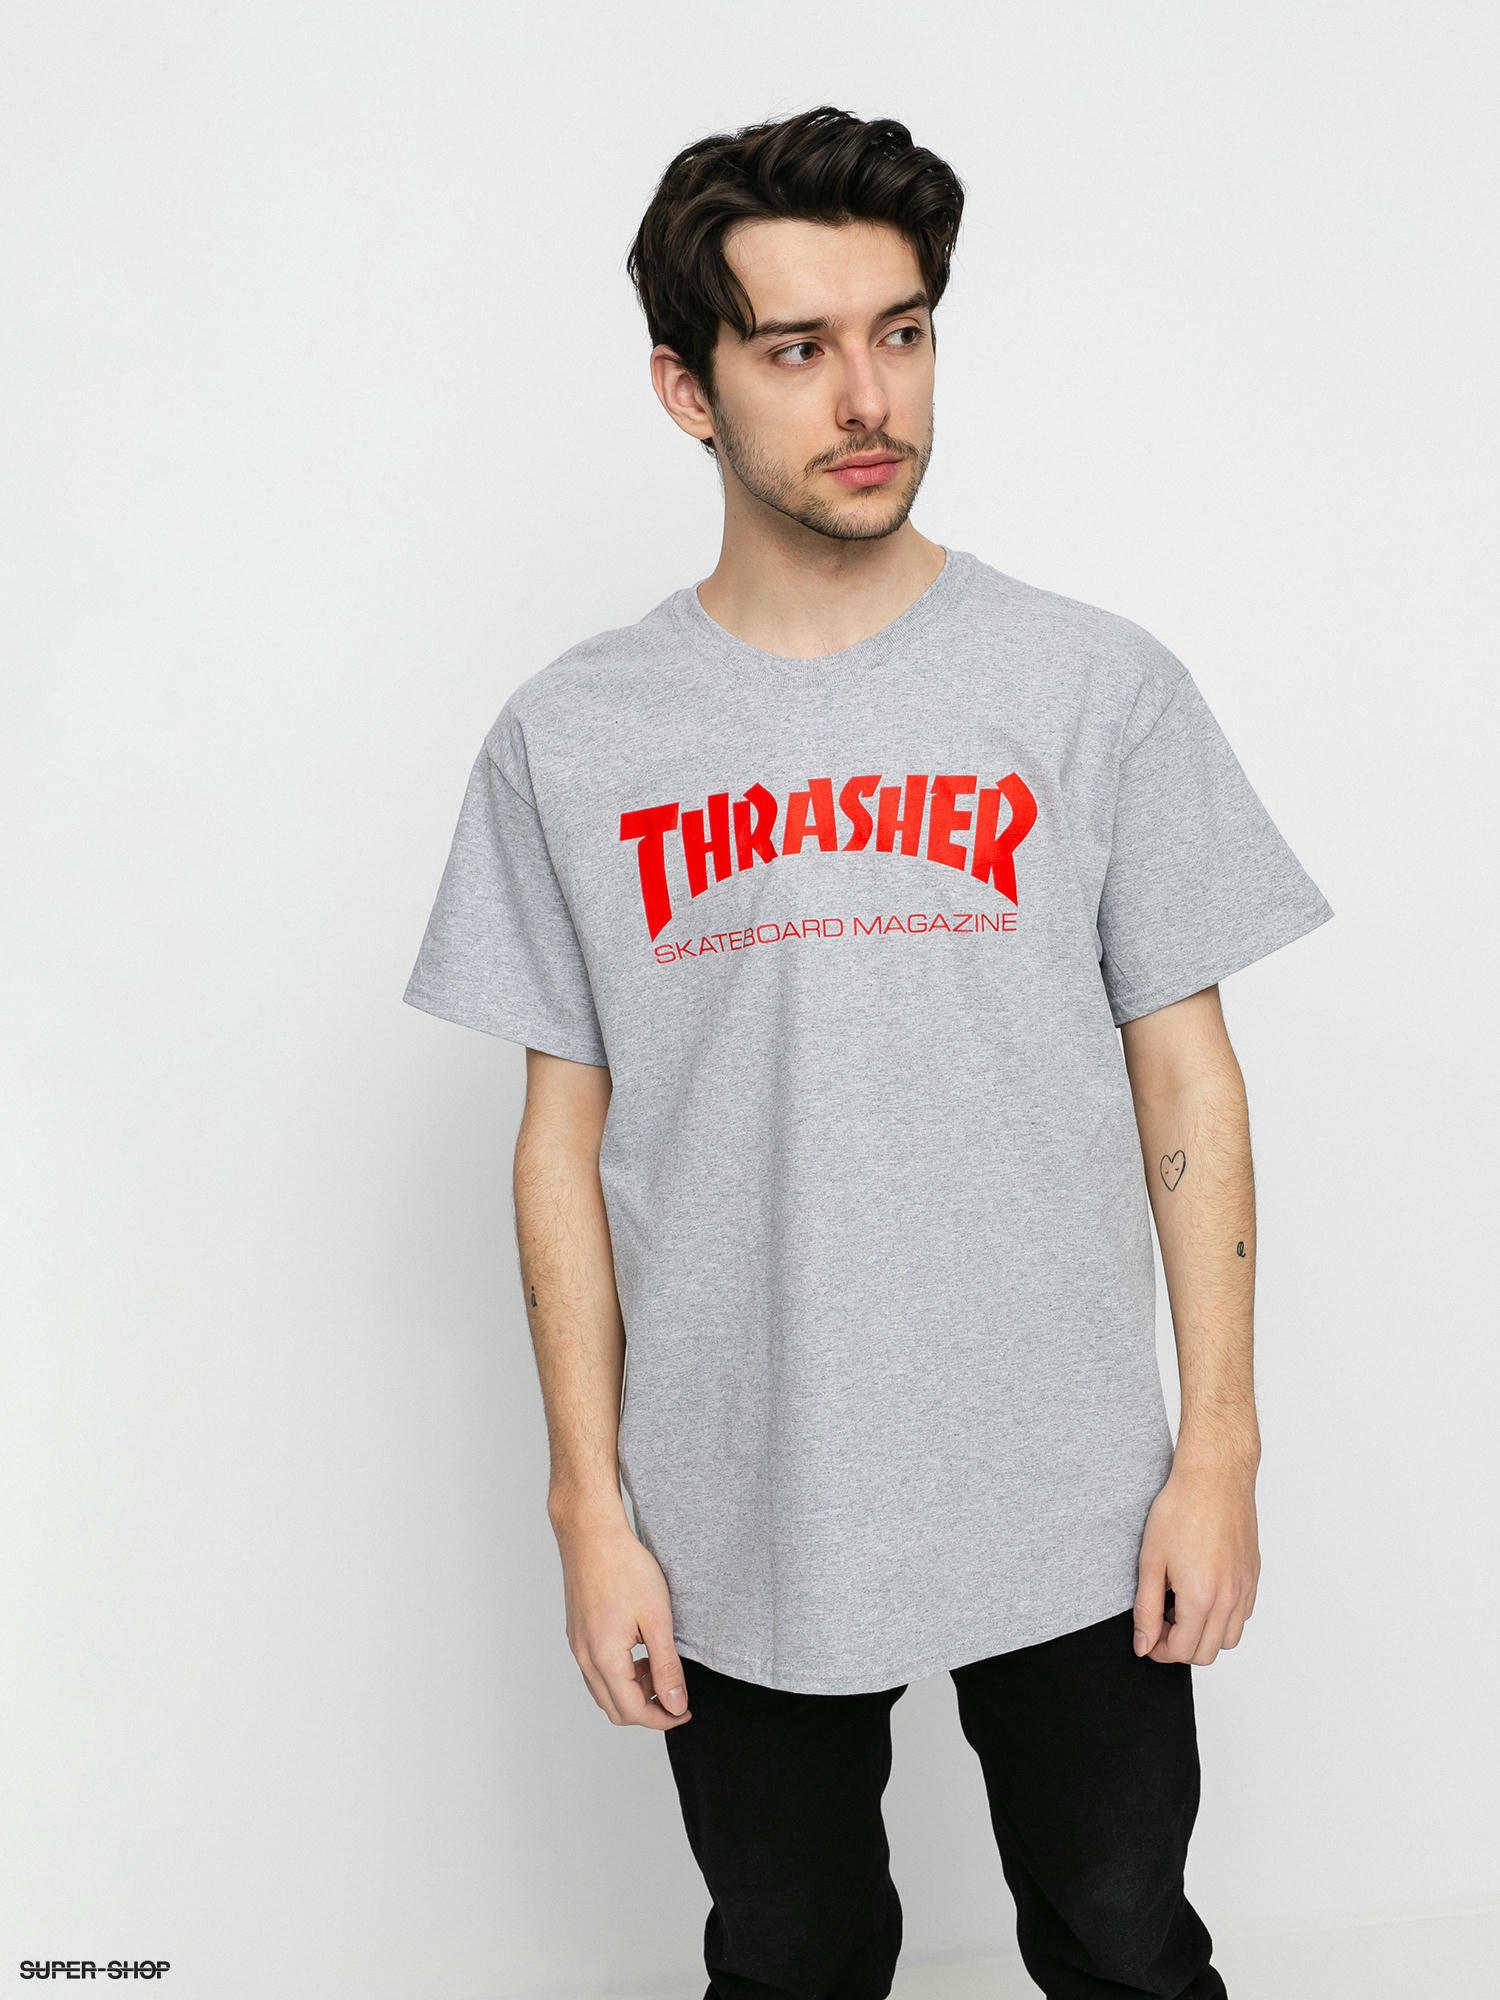 Urban Thrasher | SUPER-SHOP